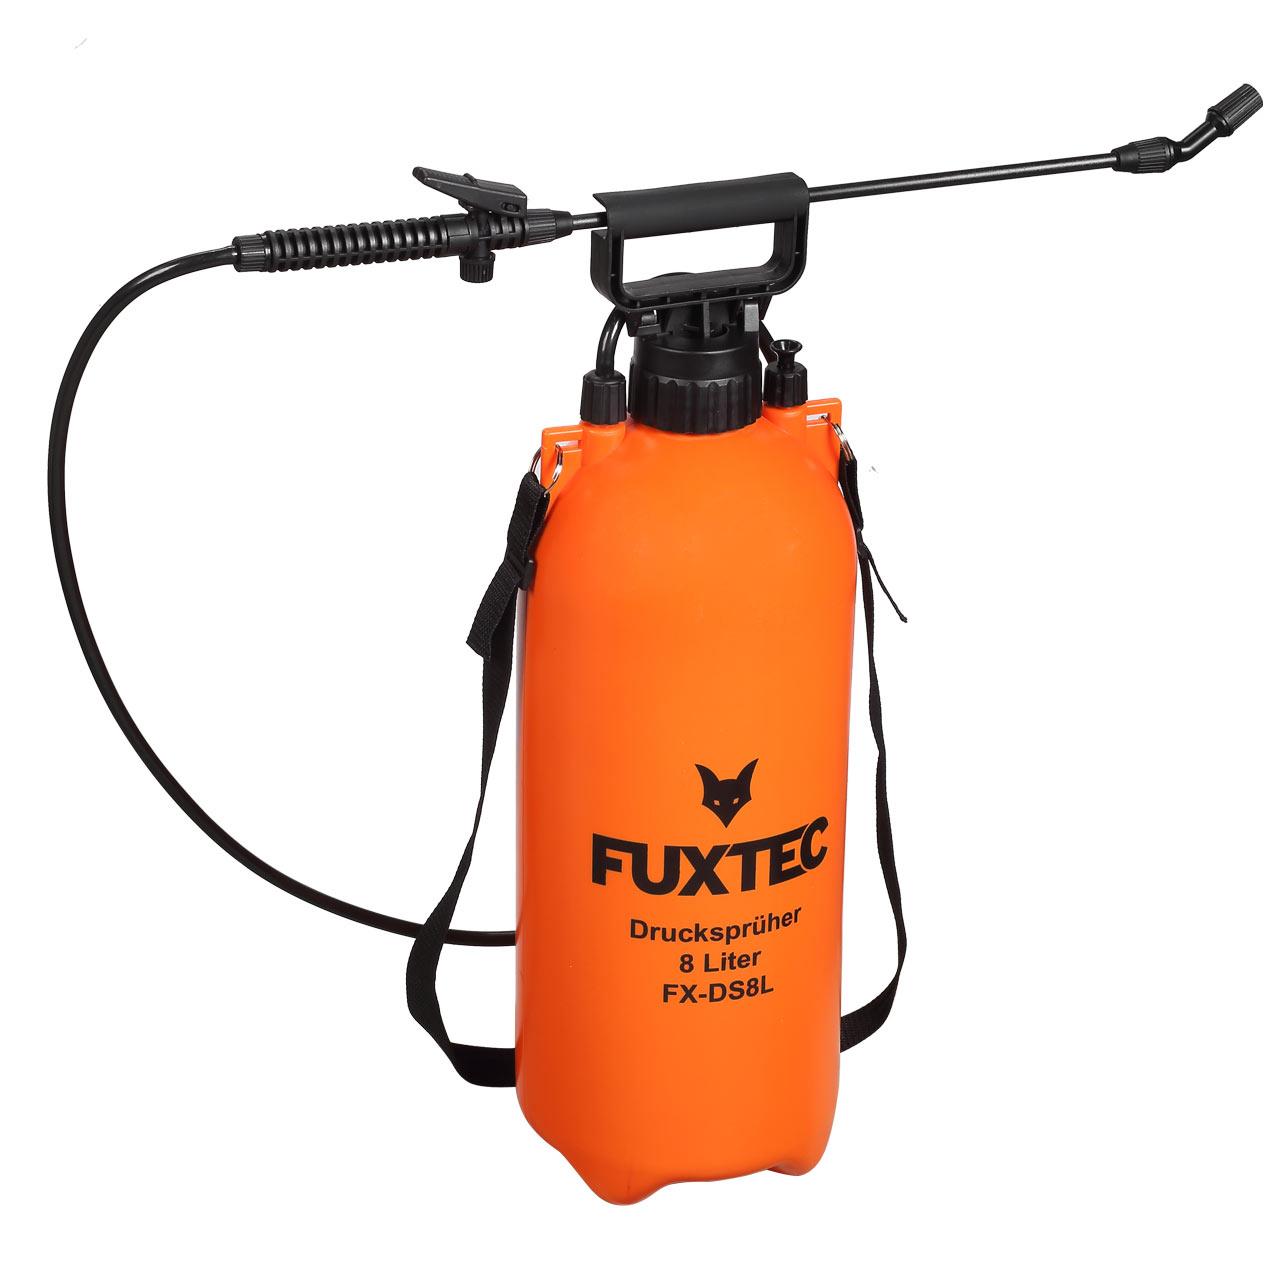 FUXTEC Drucksprüher 8 Liter FX-DS8L